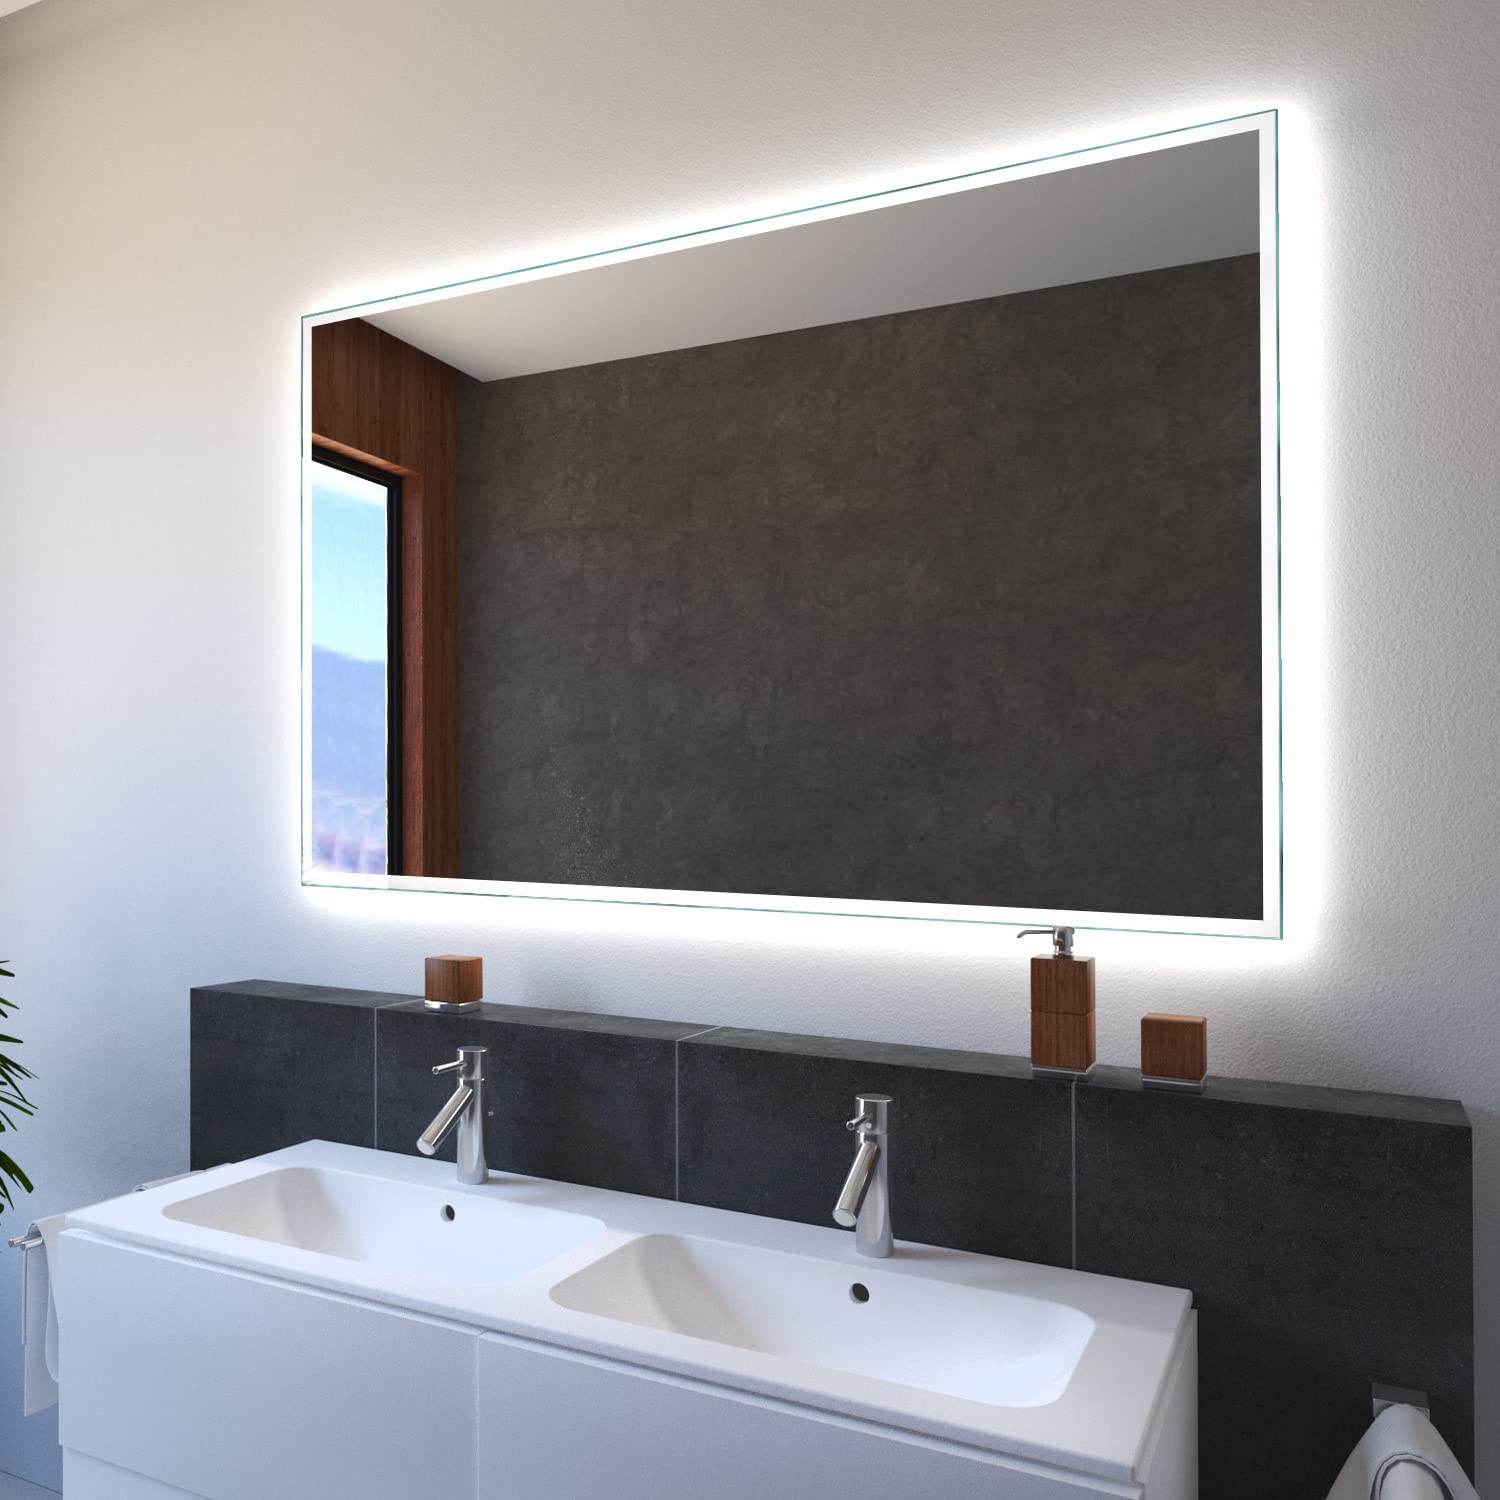 SARAR Wandspiegel mit schmaler rundum LED-Beleuchtung 100x50cm Made in Germany Designo MA4111 Badspiegel Spiegel mit Beleuchtung Badezimmerspiegel nach-auf Maß